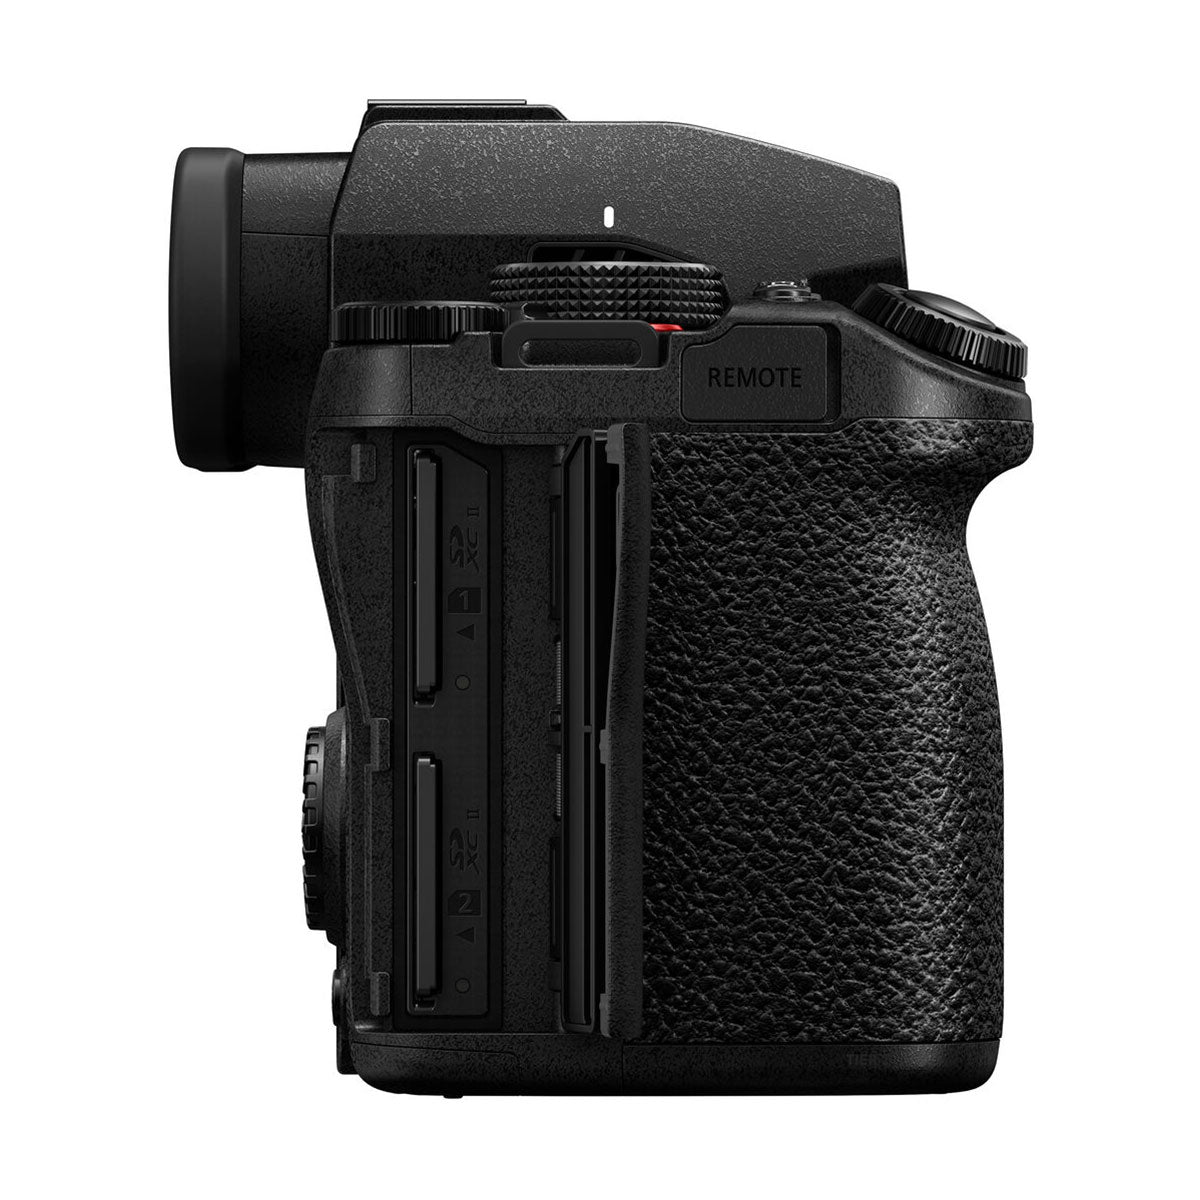 Panasonic LUMIX S5 II Mirrorless Digital Camera Body with Accessories Kit 